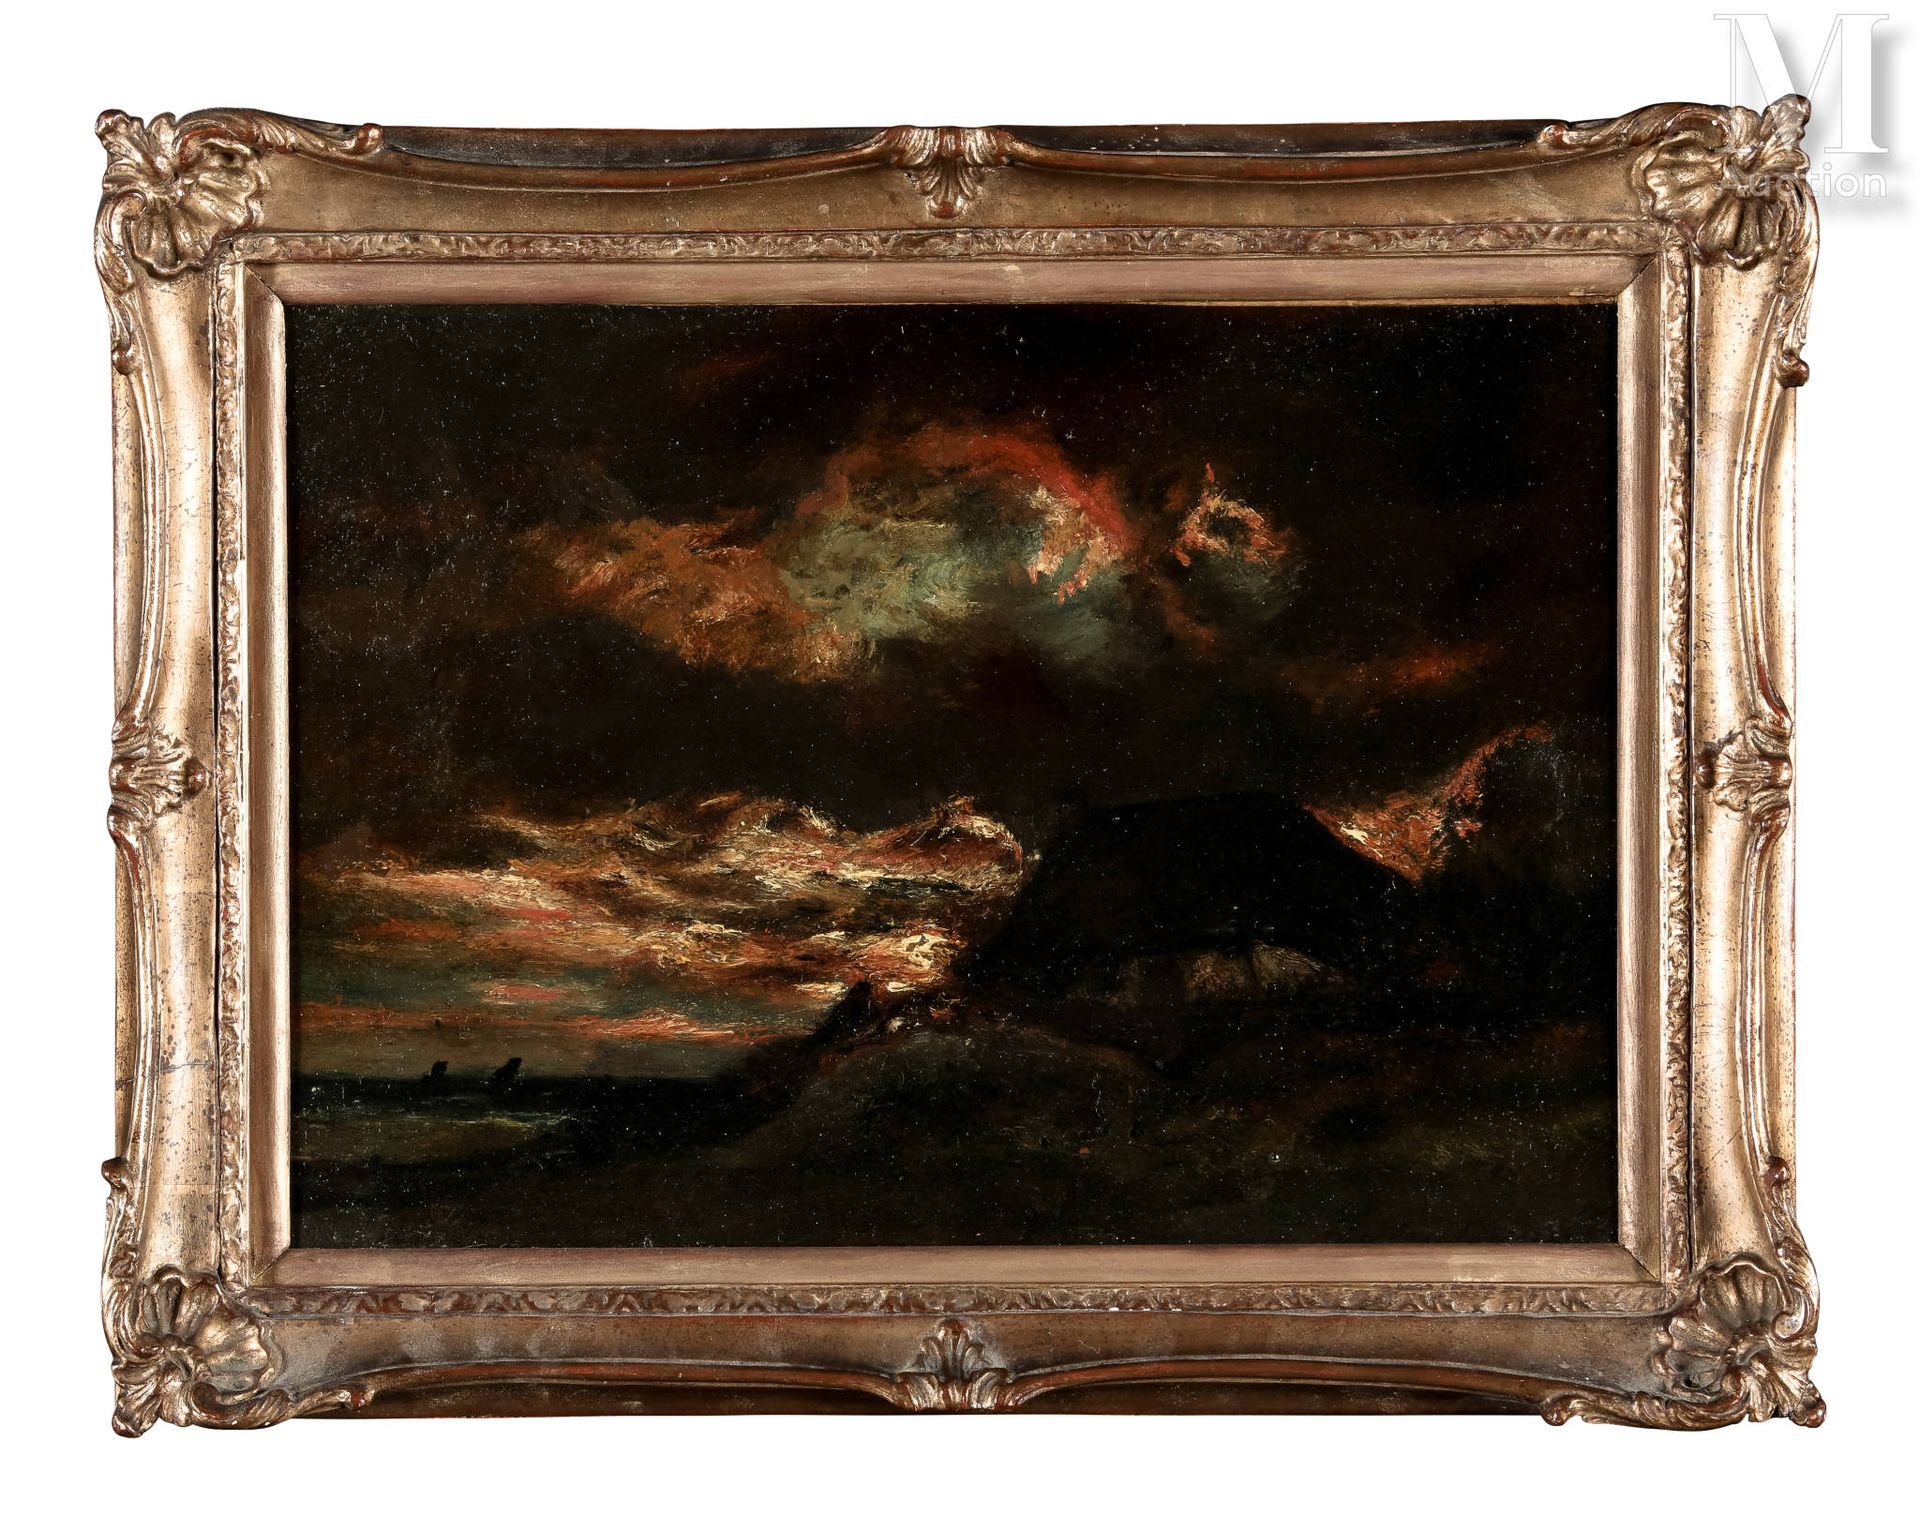 Jules DUPRÉ (1811 - 1889) 海边的小屋，靠近卡耶，日落时分

布面油画 
26 x 37,5 cm
右下方有签名

要与售出的作品进行比&hellip;